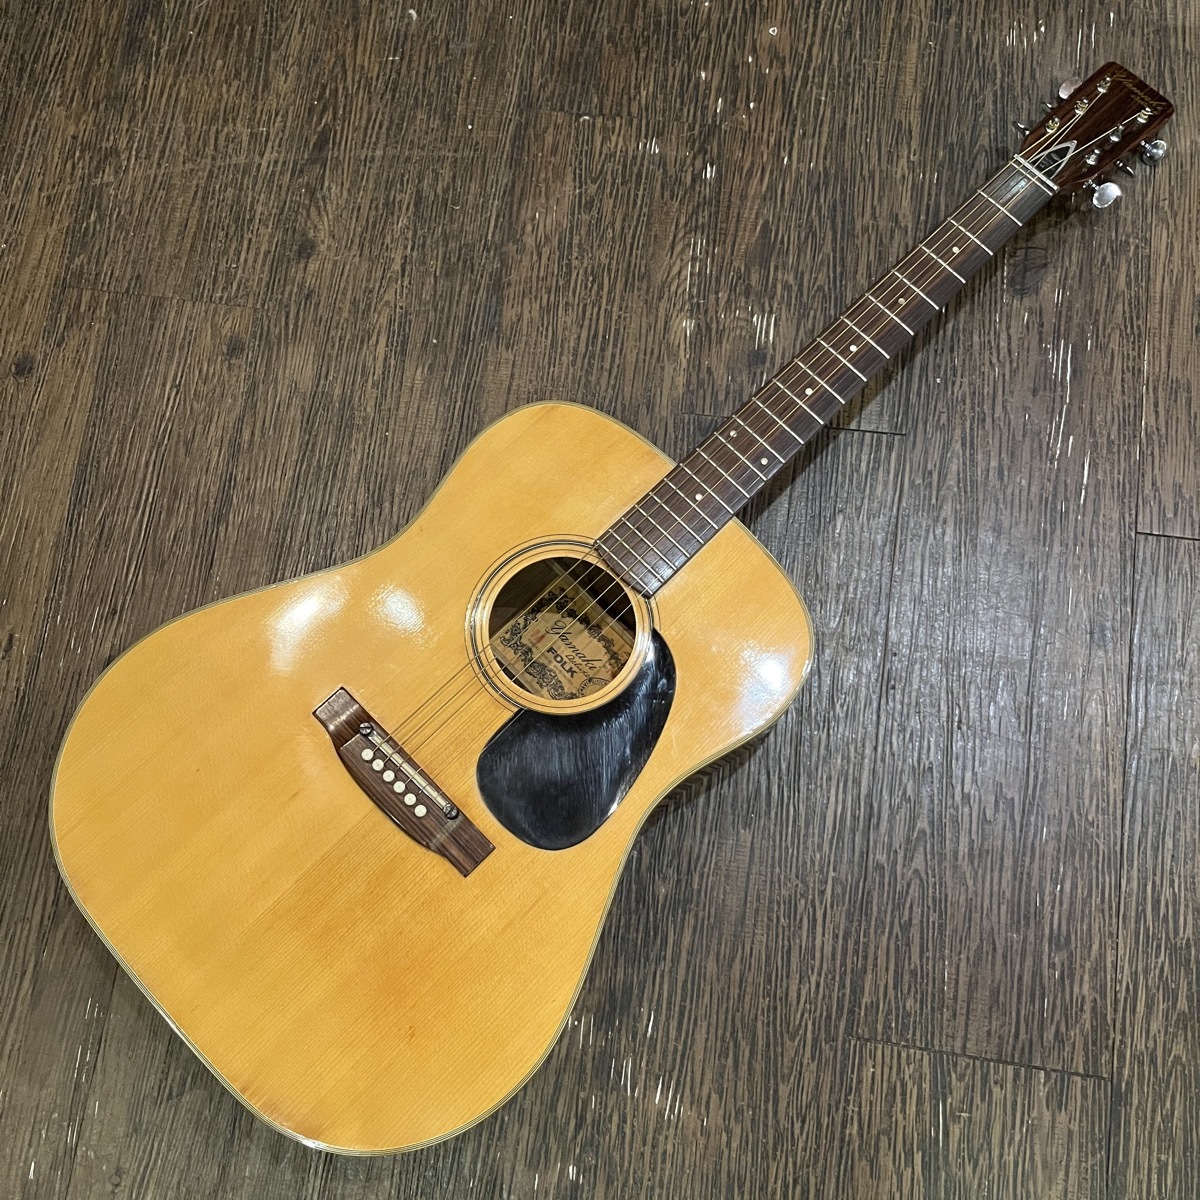 Yamaki Deluxe FOLK No.115 Acoustic Guitar アコースティックギター